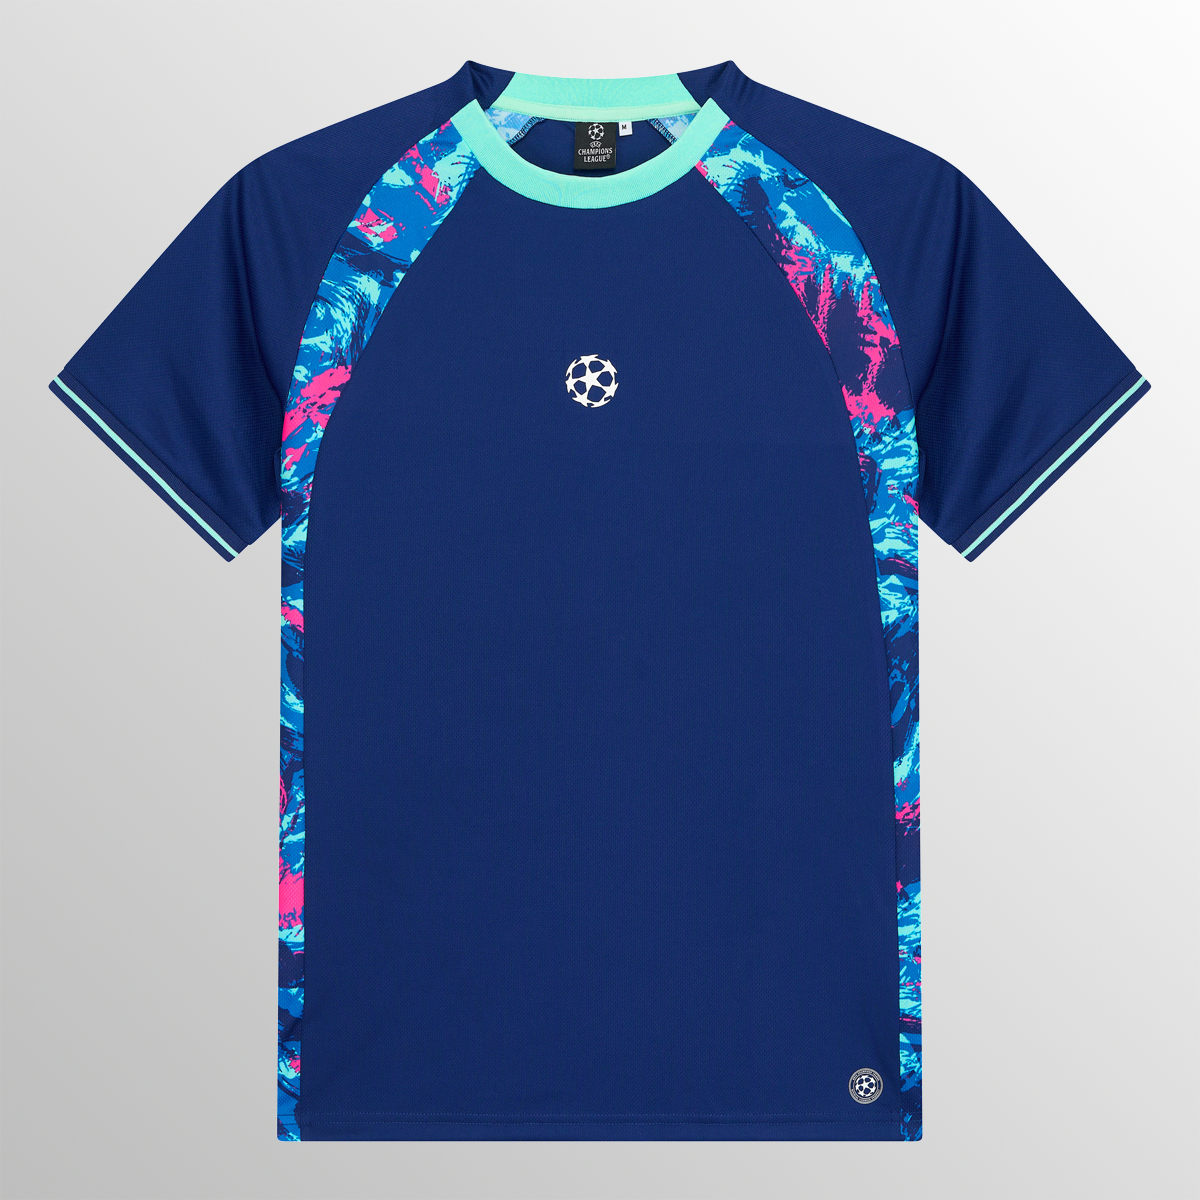 UEFA Champions League Blue Performance T-shirt